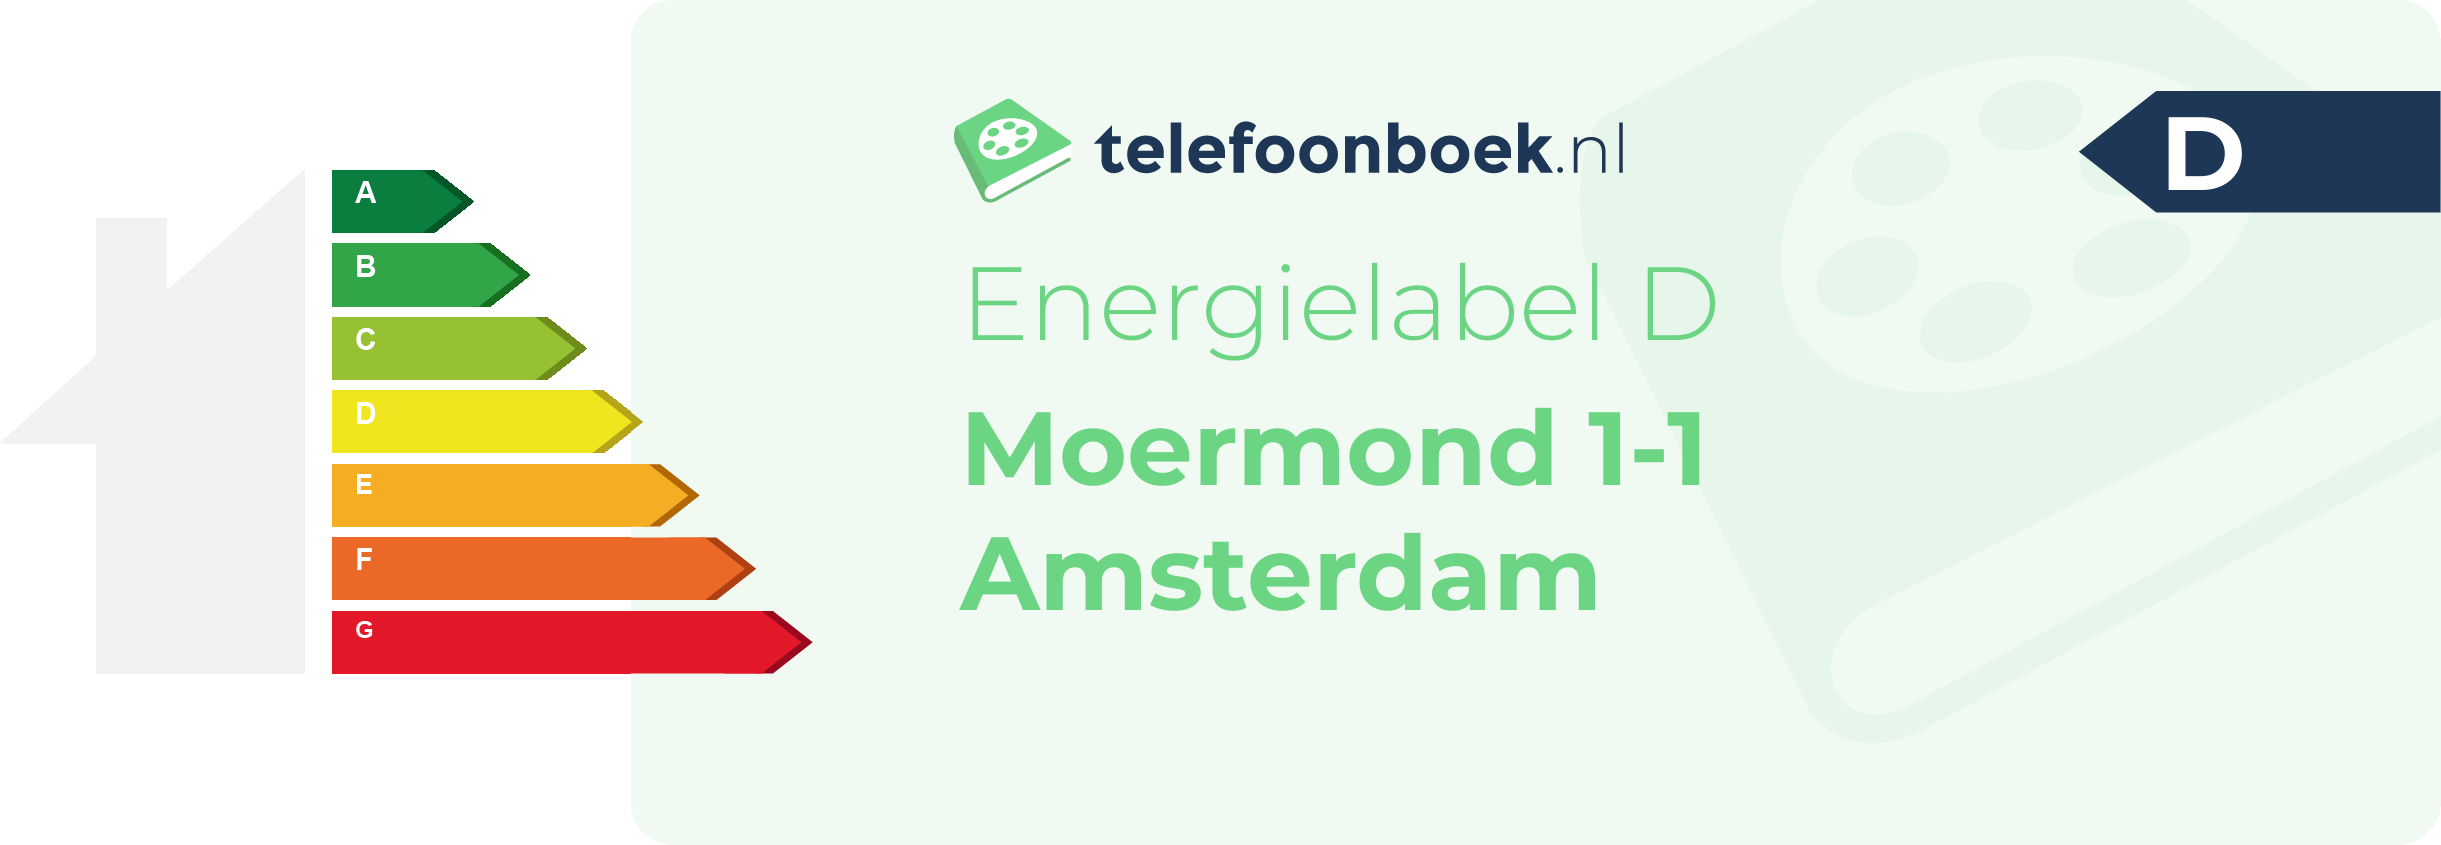 Energielabel Moermond 1-1 Amsterdam